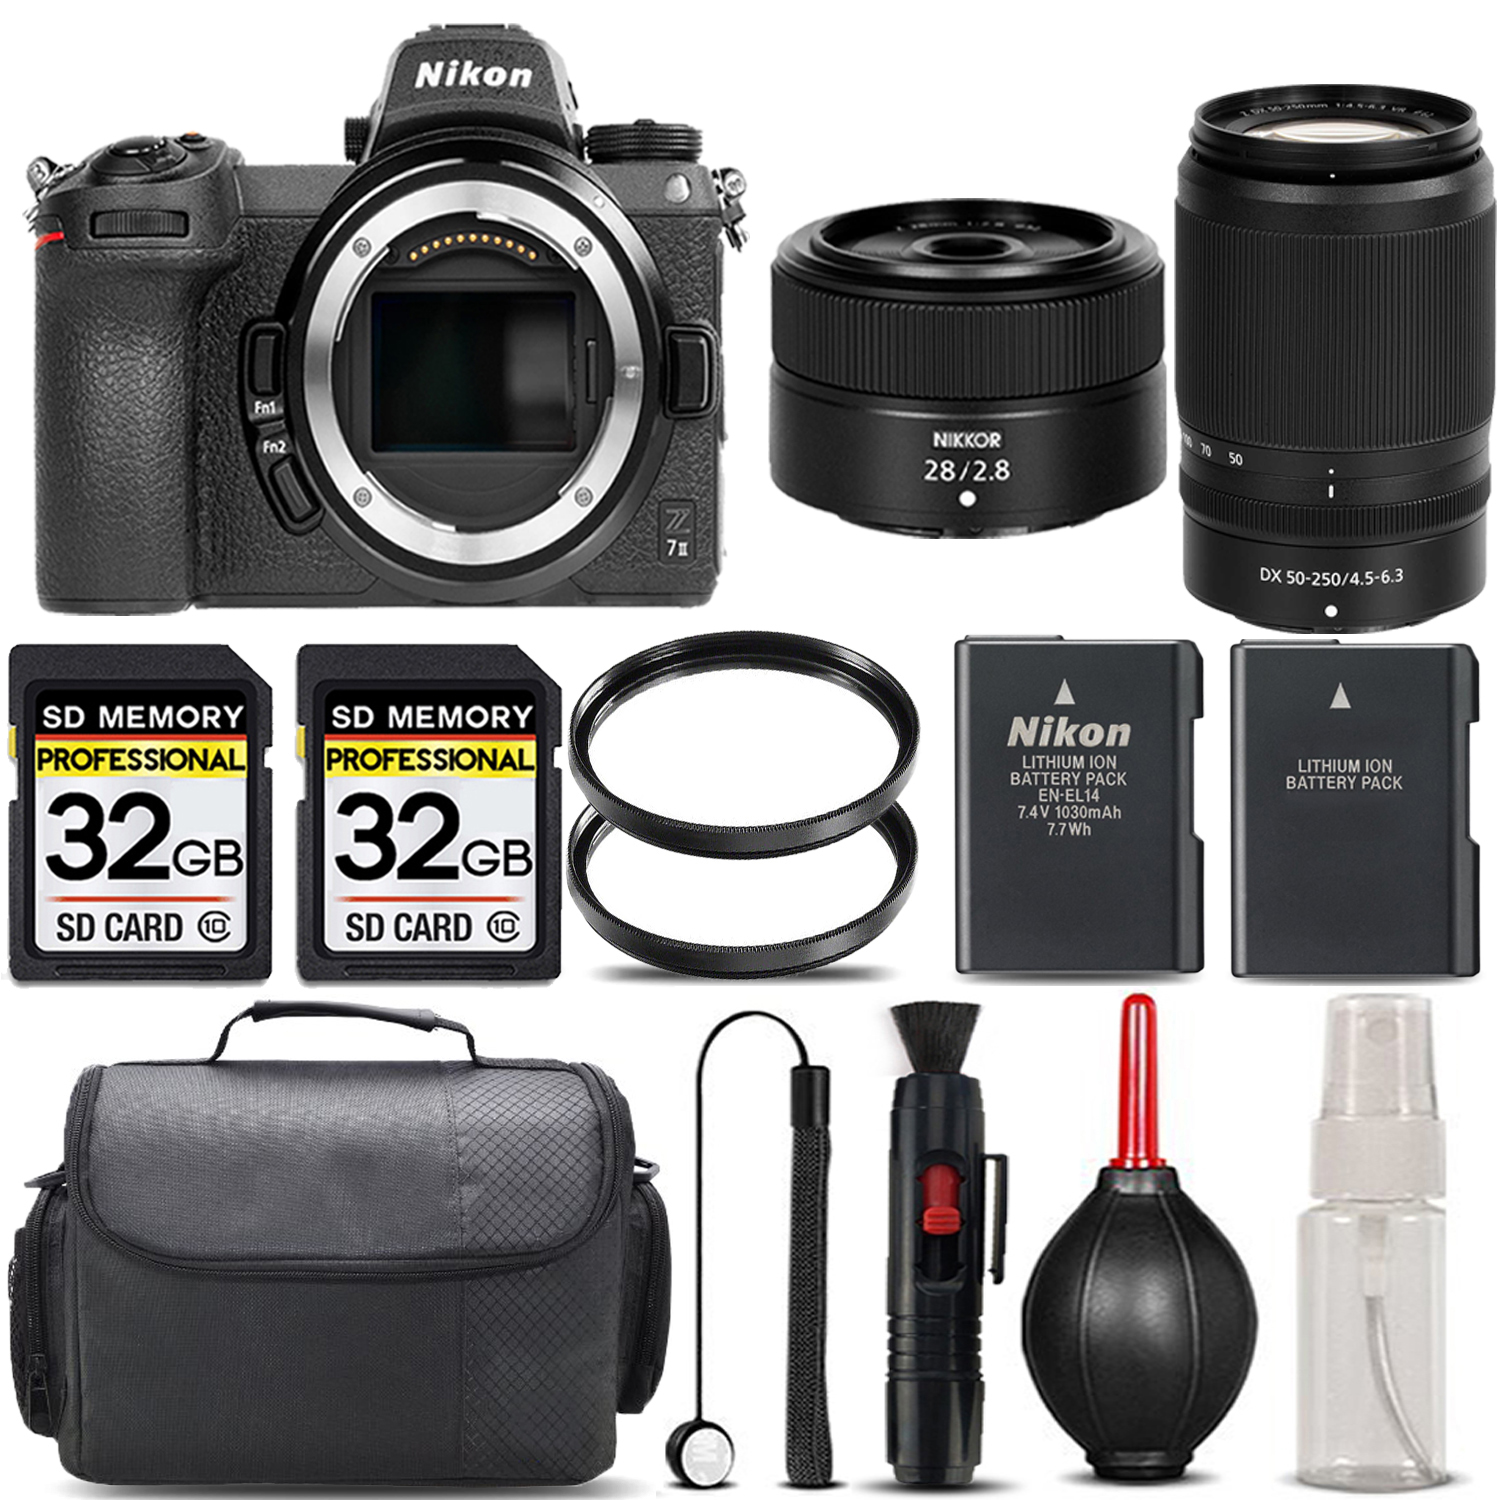 Z7 II + 50-250mm f/4.5-6.3 Lens + 28mm f/2.8 Lens + Handbag - SAVE BIG KIT *FREE SHIPPING*